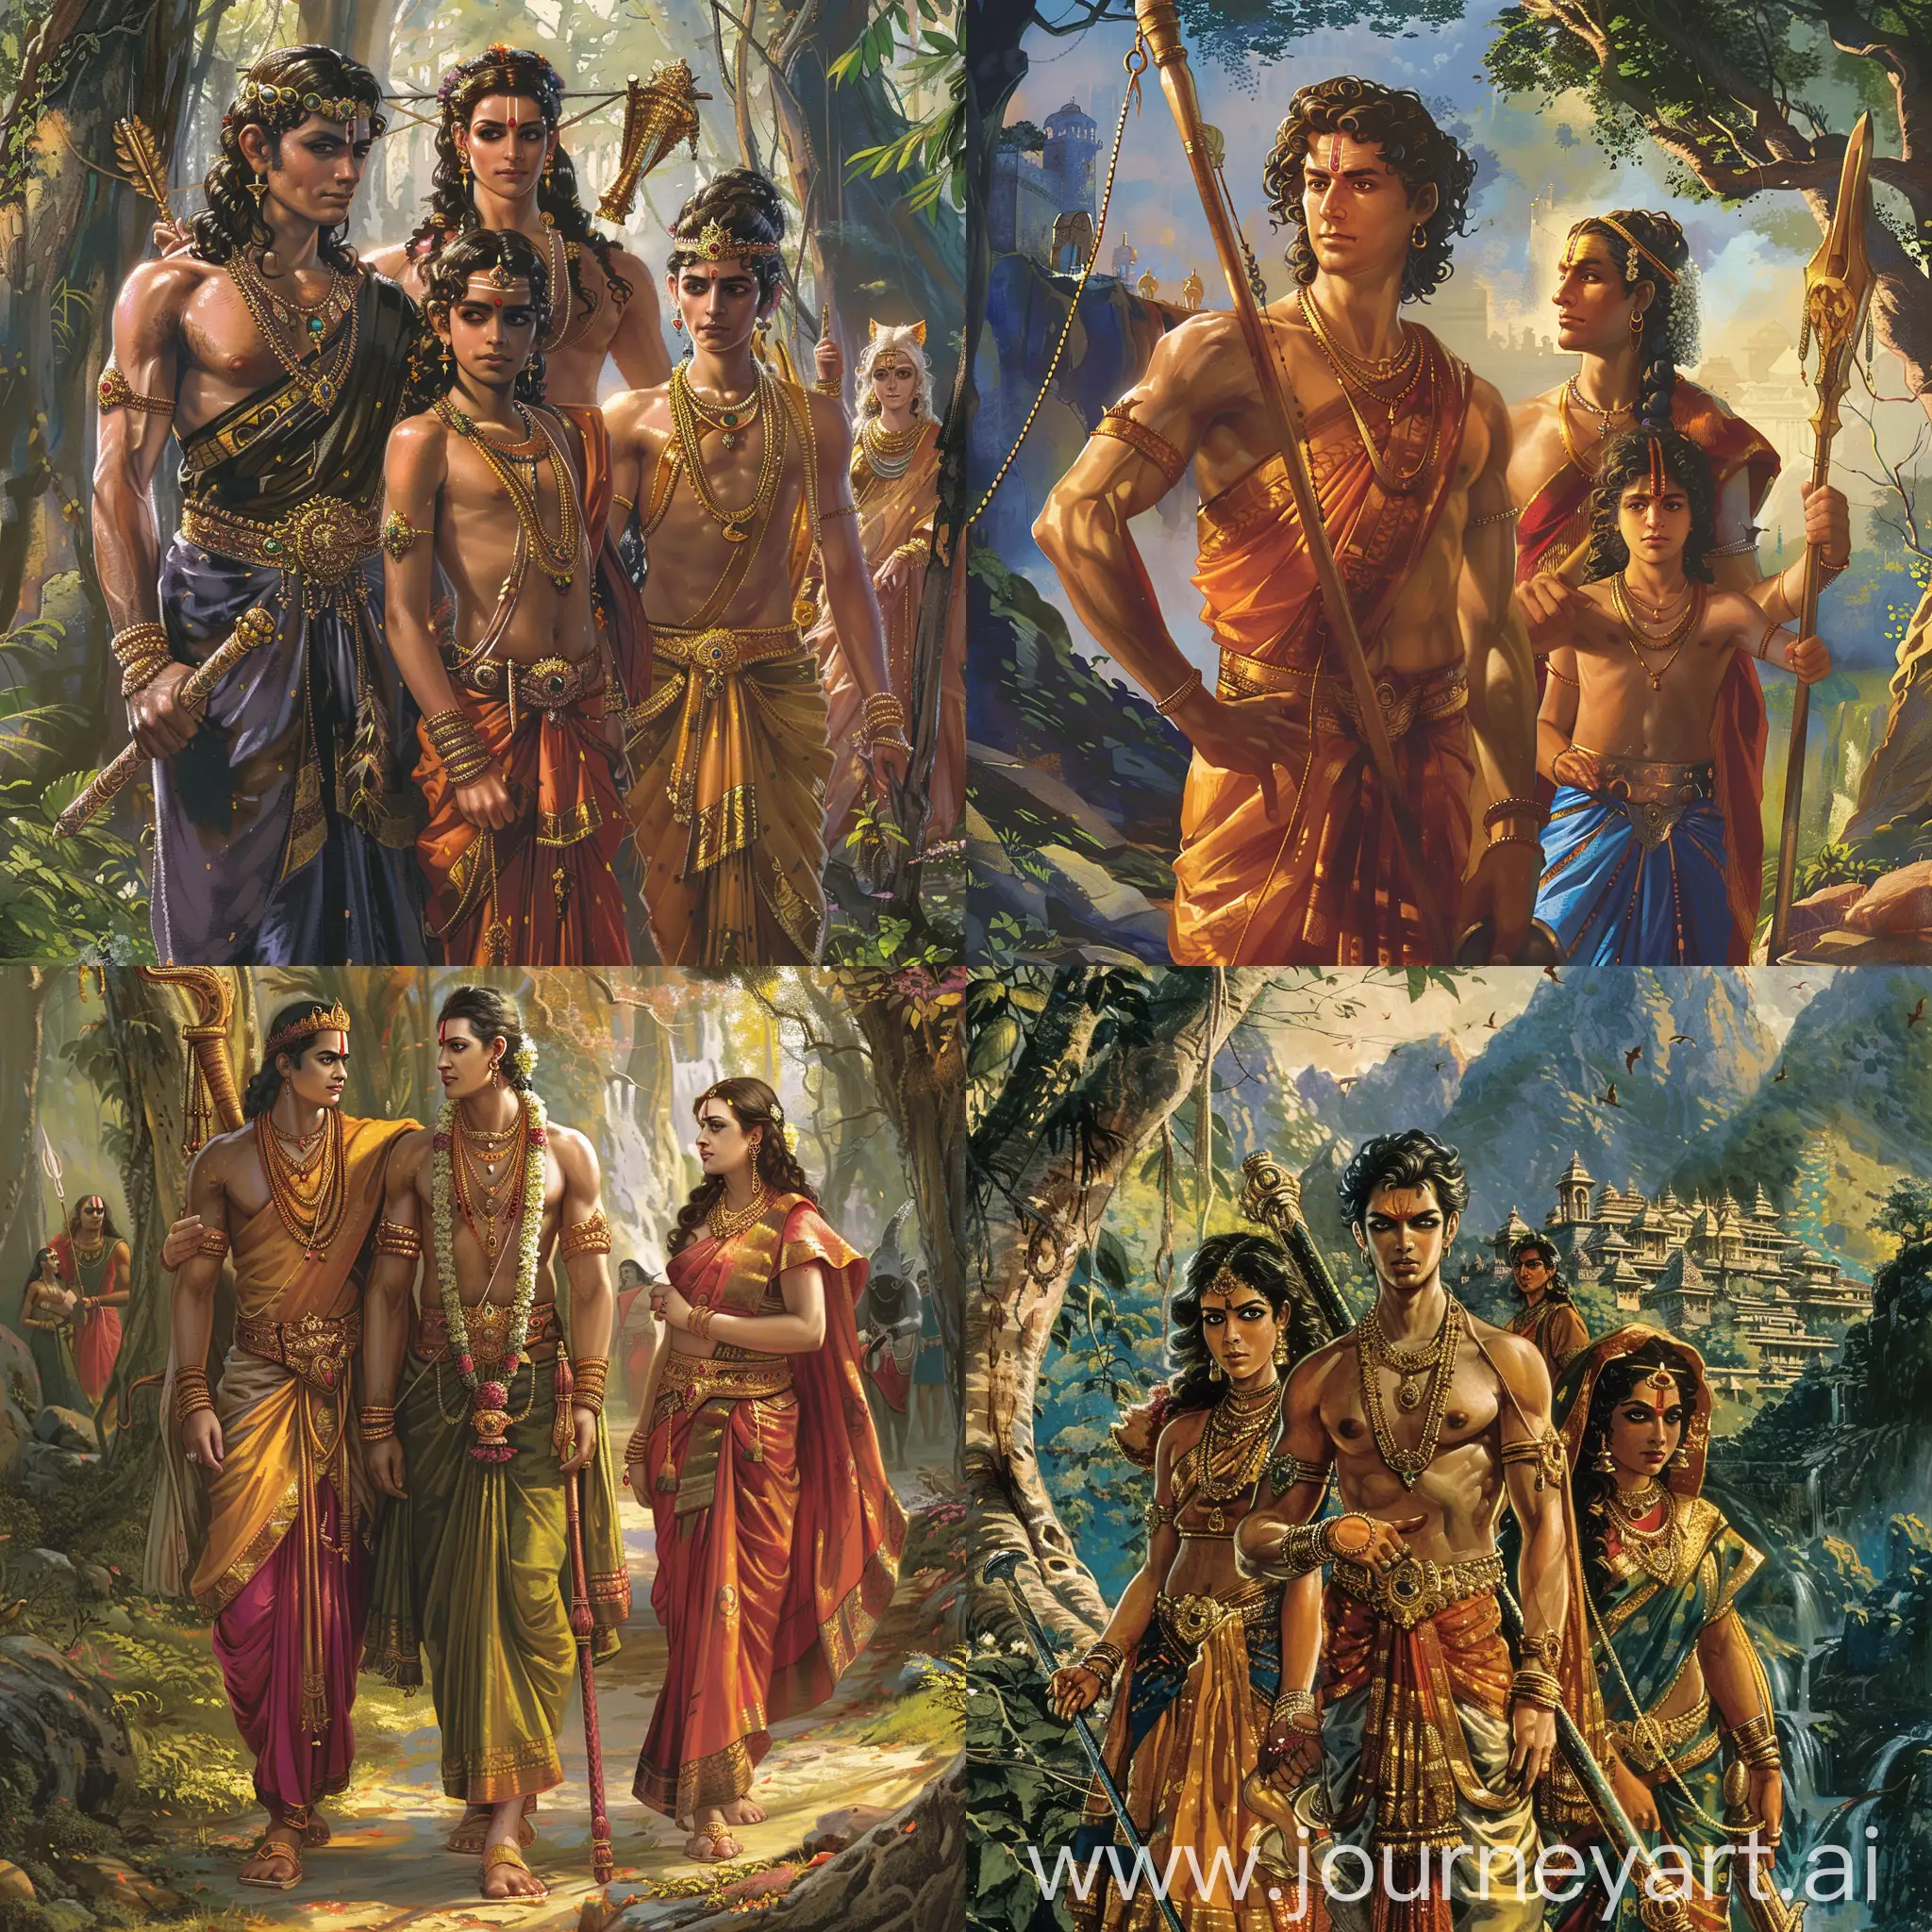 Prince-Ramas-Exile-Banishment-from-Ayodhya